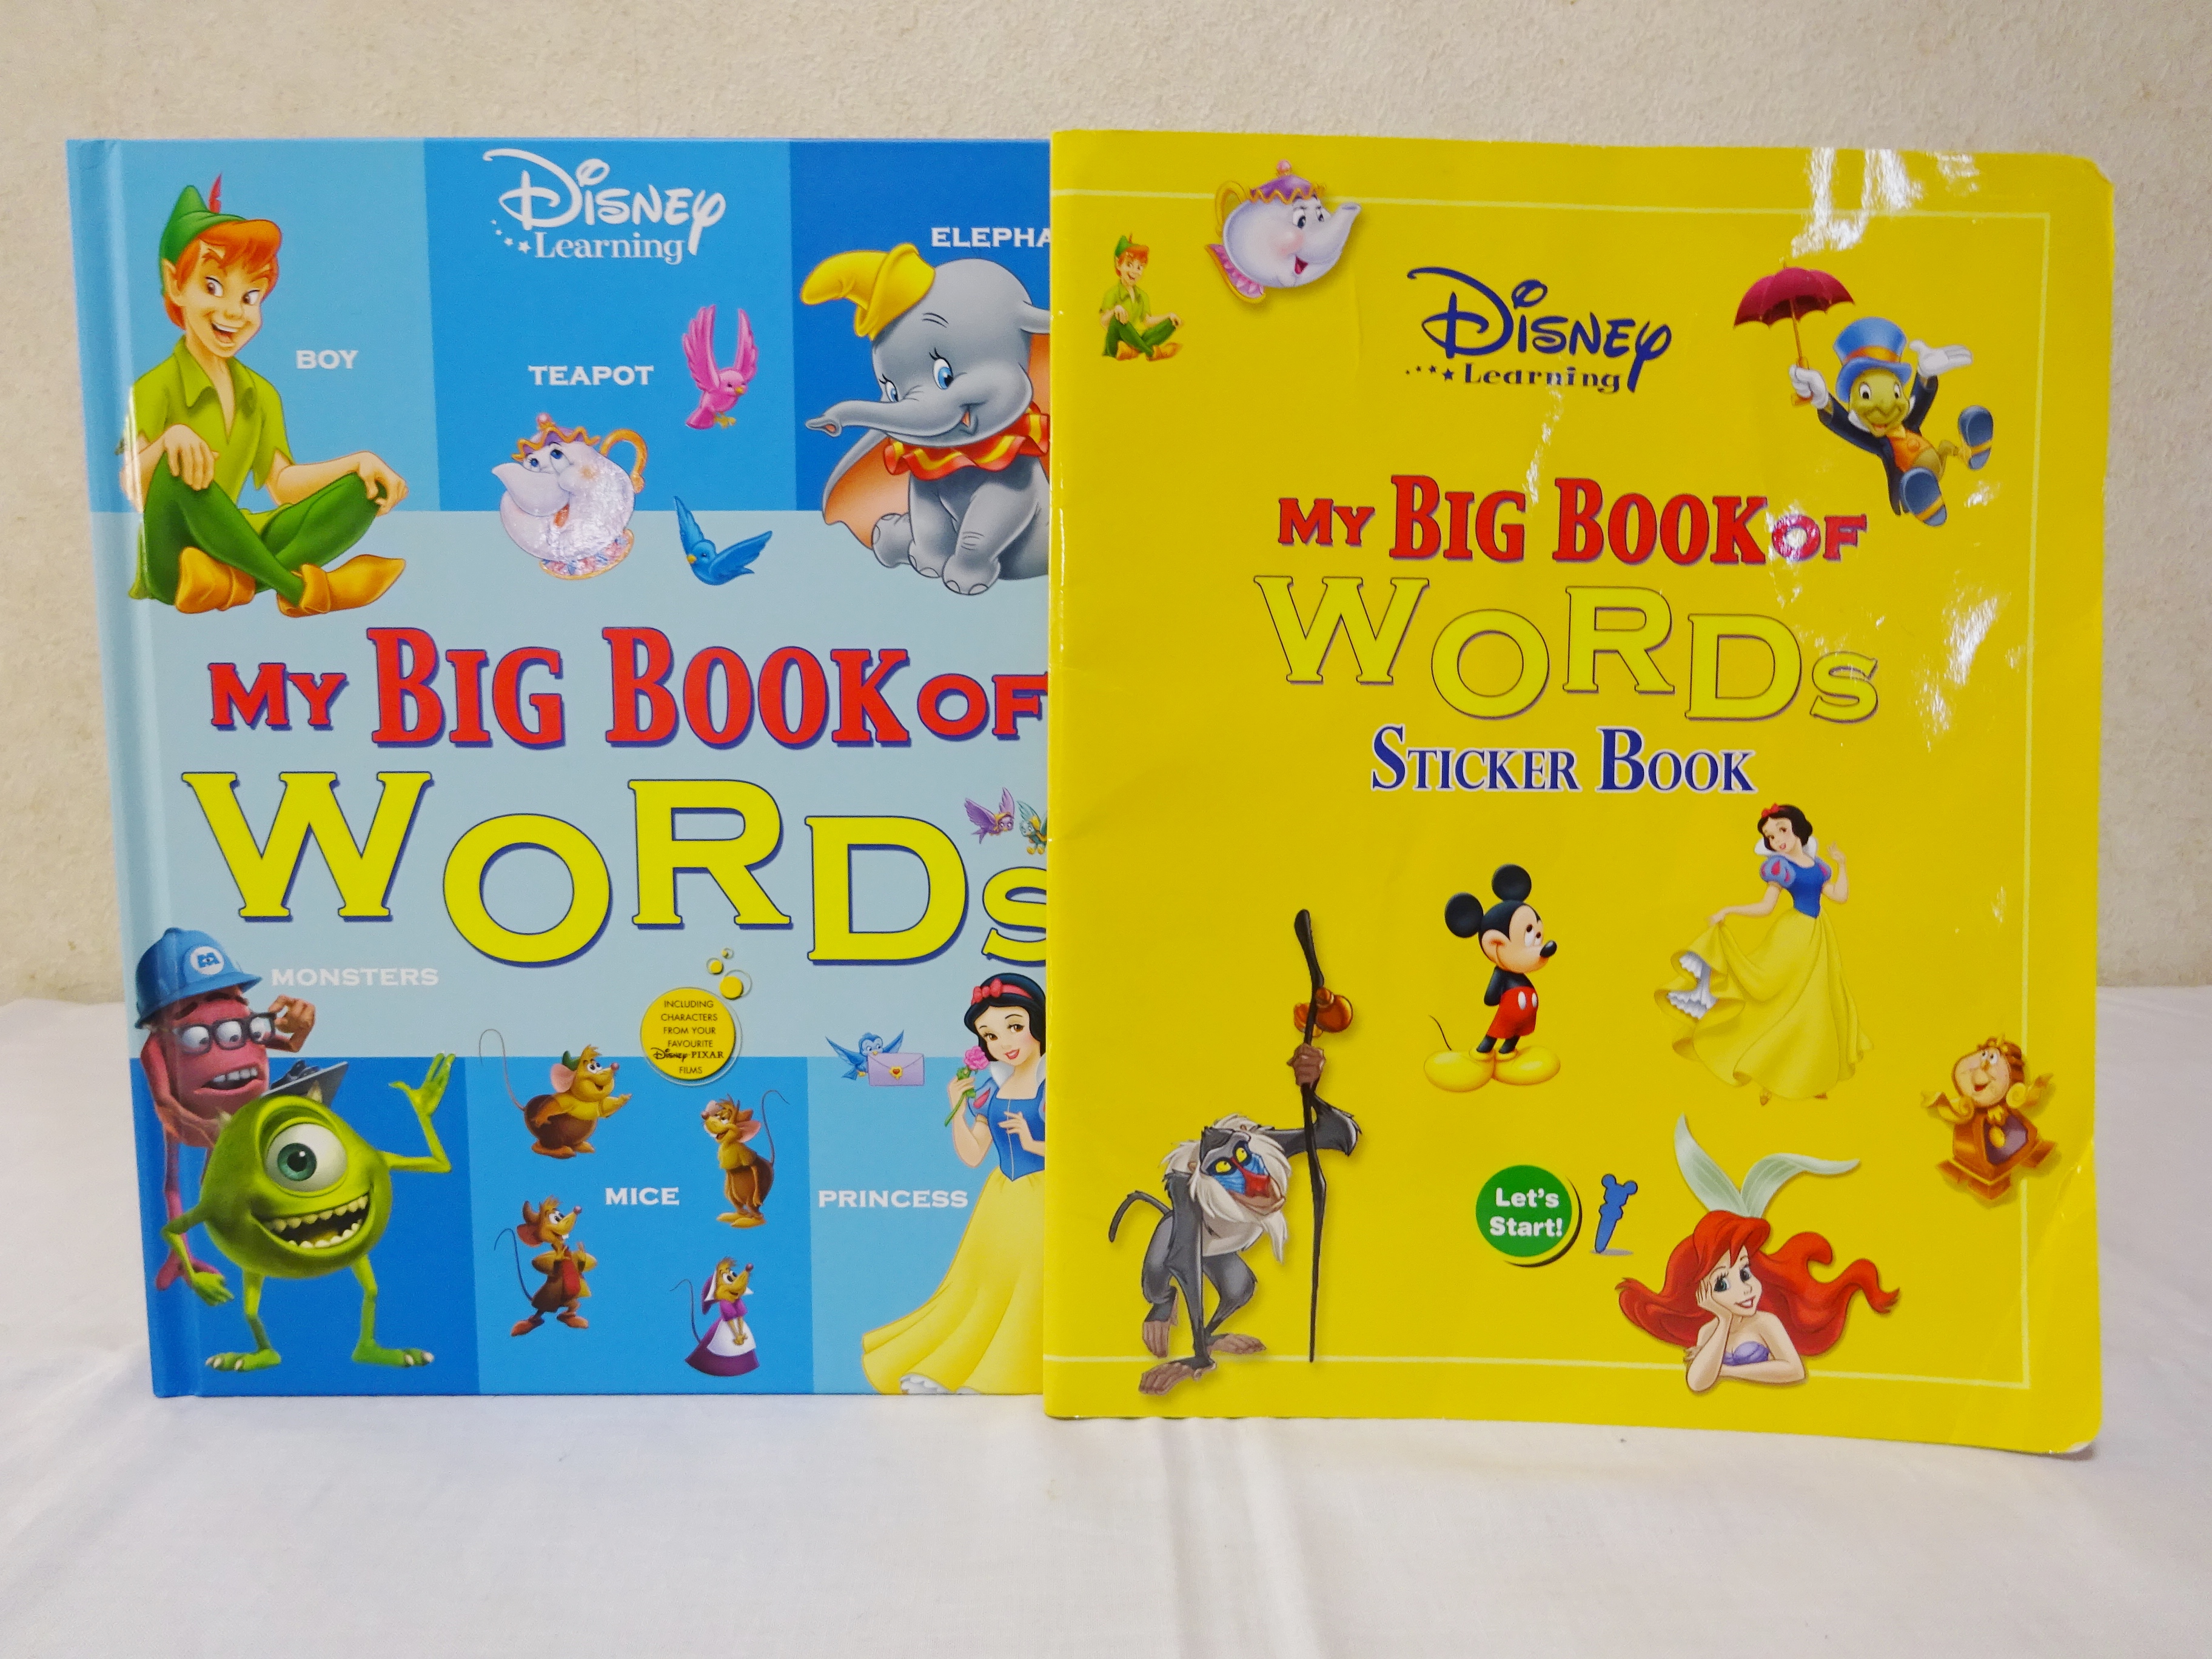 DWE ディズニー英語システム ミッキーマジックペン MY BIG BOOK ステッカーブック | ディズニー英語システムの高価買取店